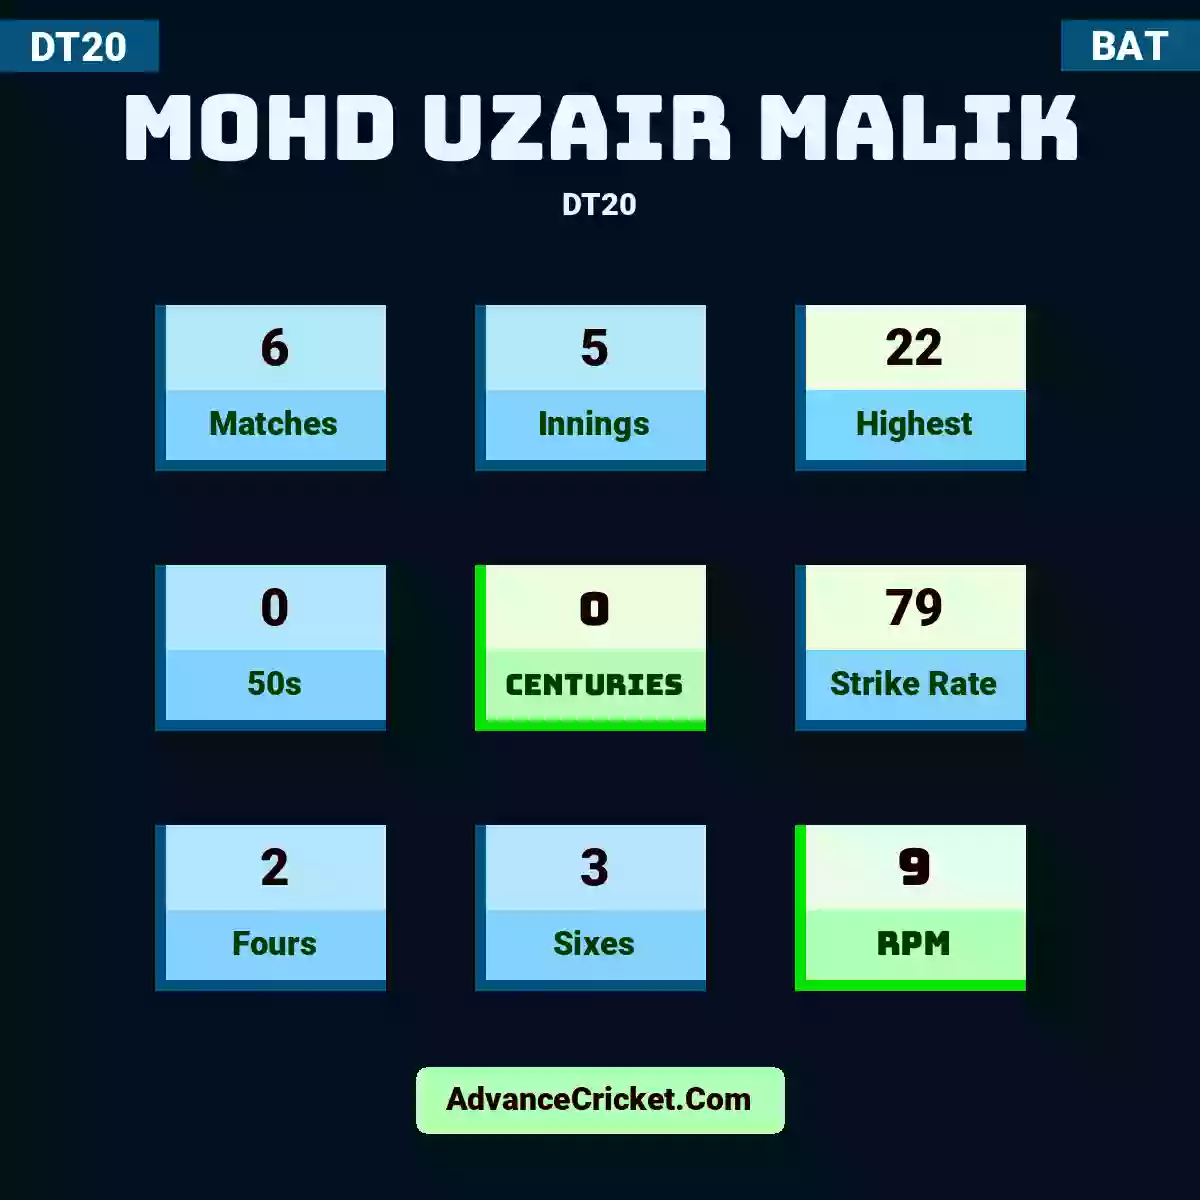 Mohd Uzair Malik DT20 , Mohd Uzair Malik played 6 matches, scored 22 runs as highest, 0 half-centuries, and 0 centuries, with a strike rate of 79. M.Uzair.Malik hit 2 fours and 3 sixes, with an RPM of 9.